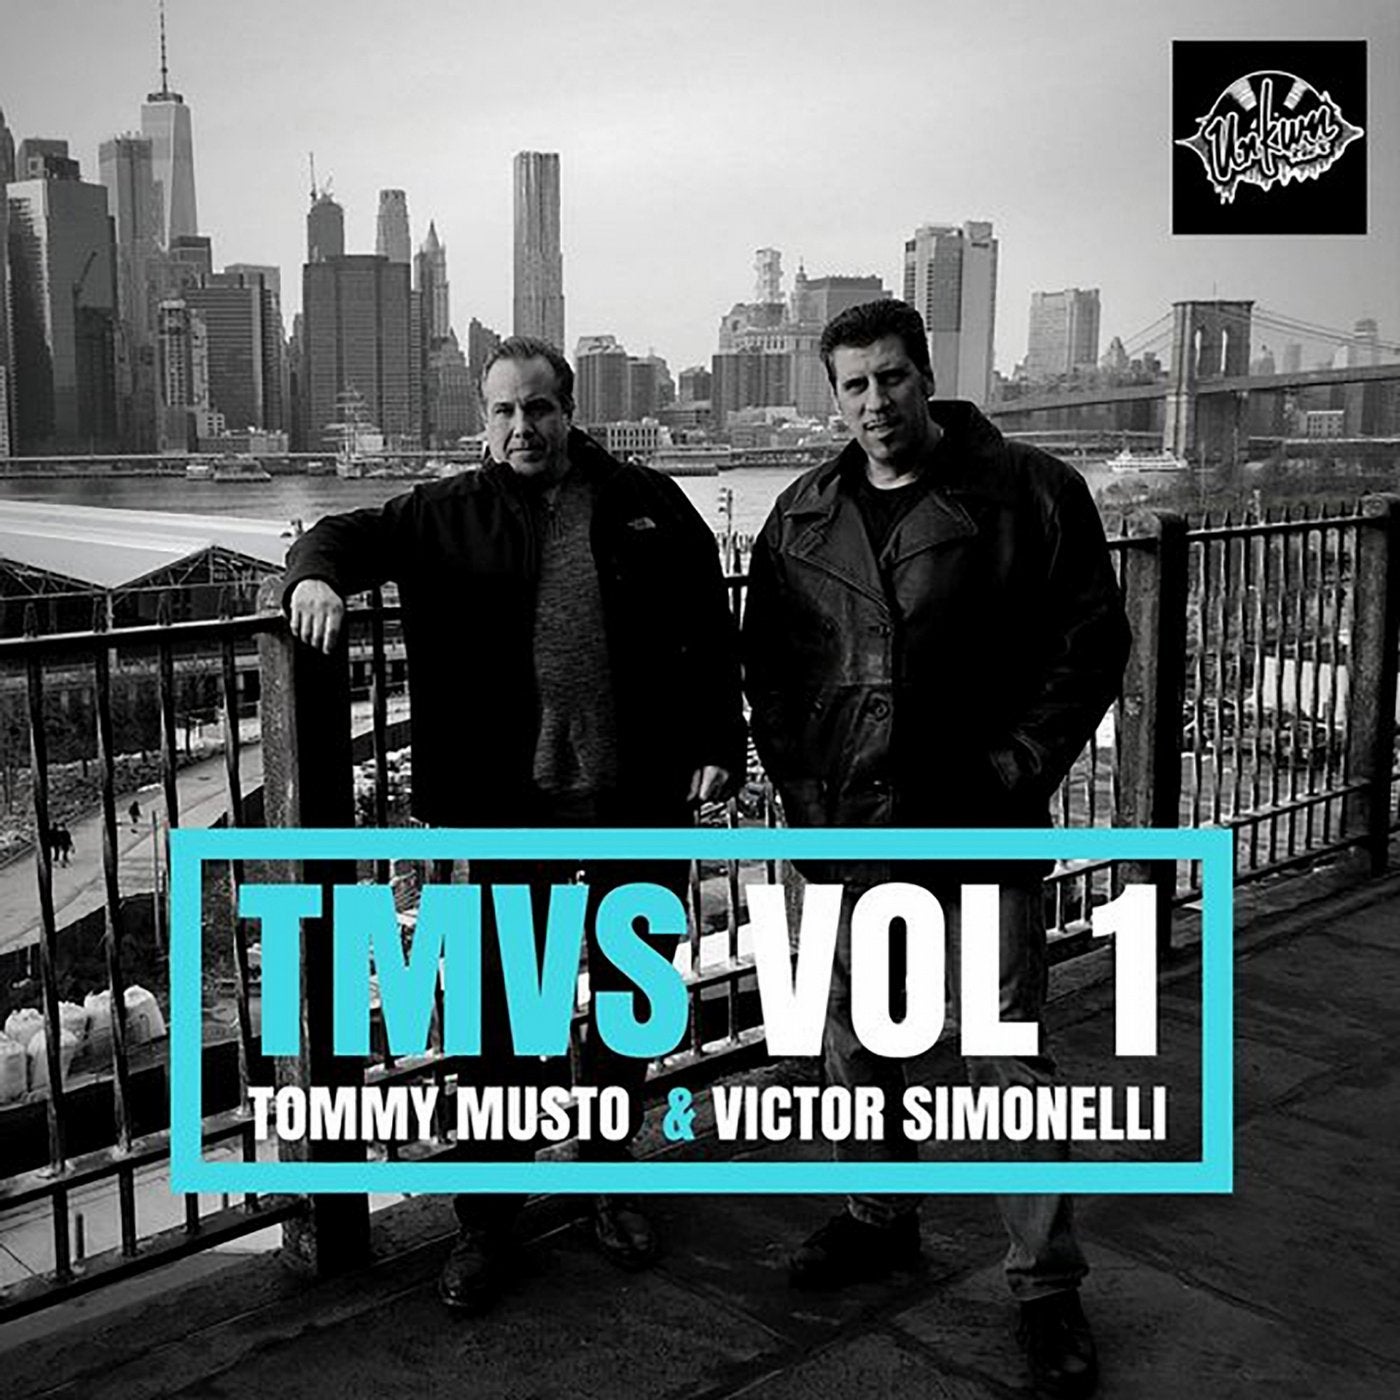 TMVS Vol. 1